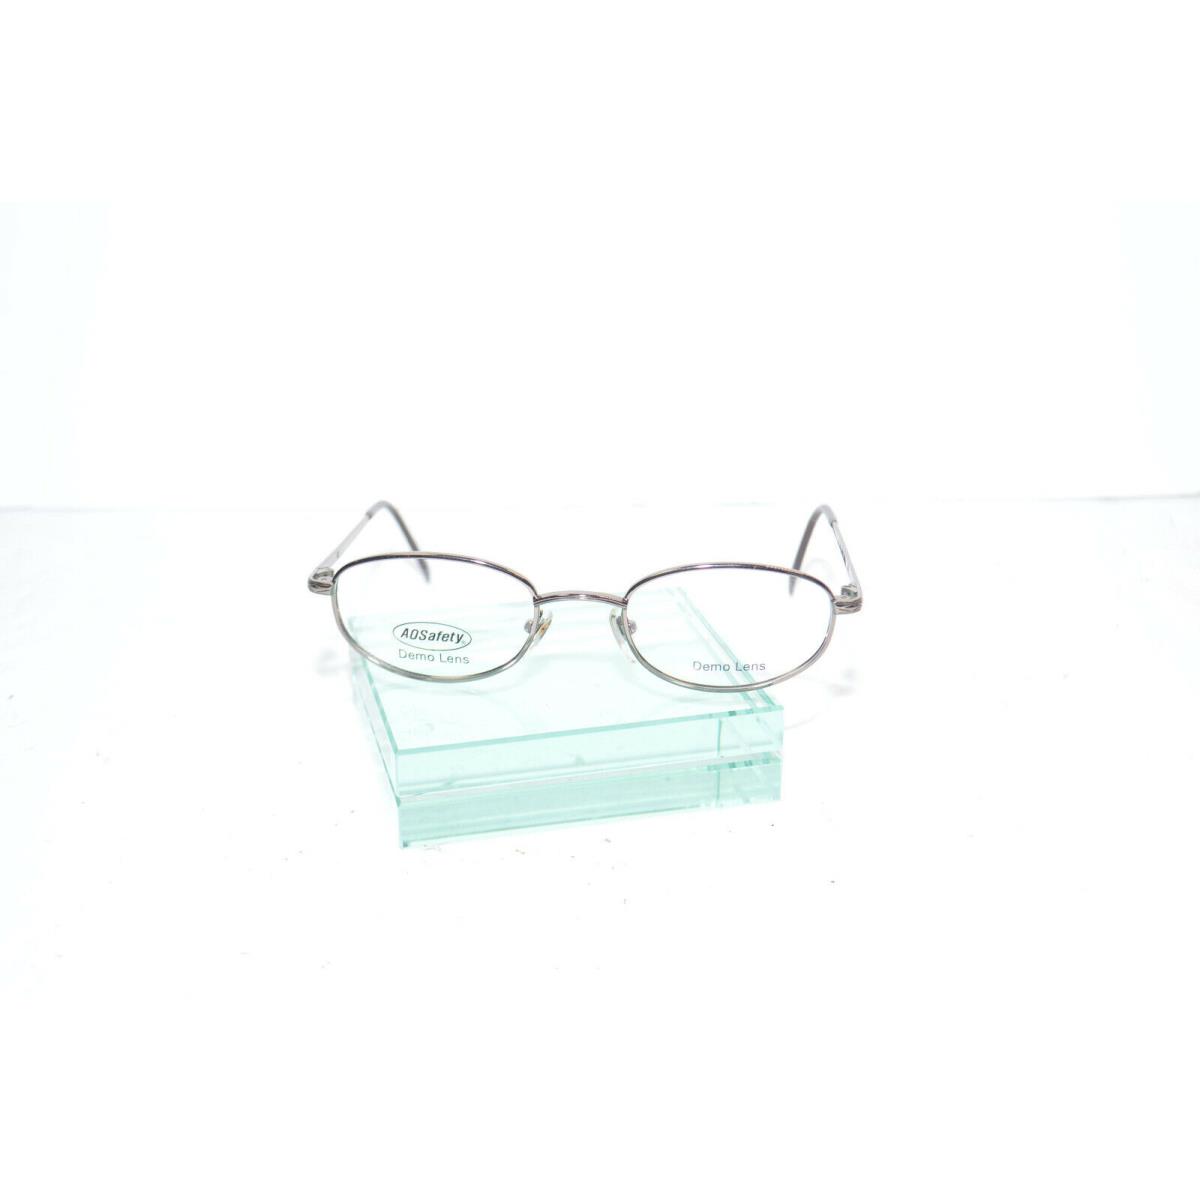 American Optical Aosafety Alpha Eyeglasses Frames 49 20-130MM Nos